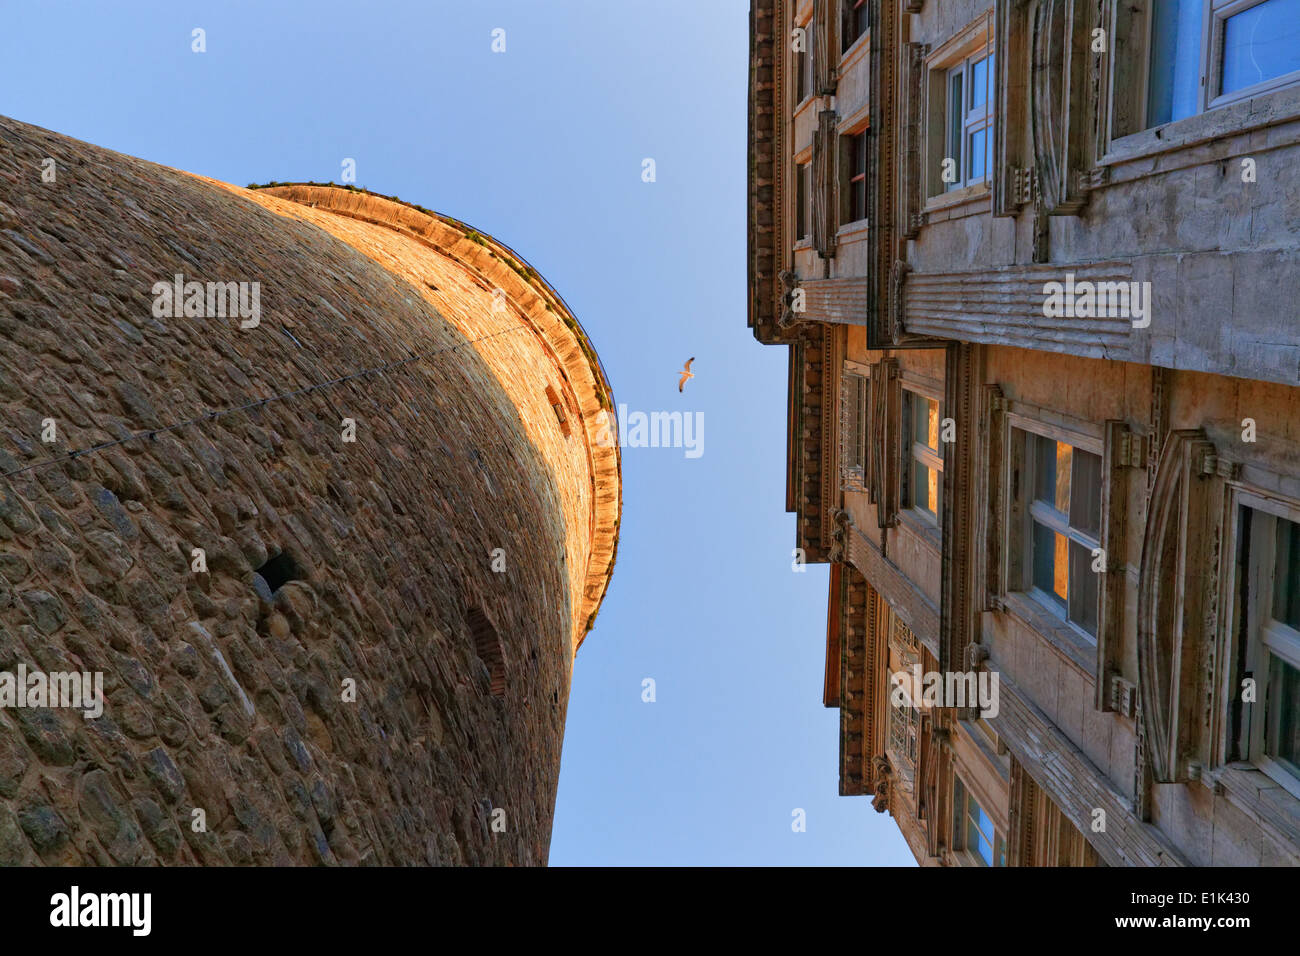 Turkey, Istanbul, Galata, Galata Tower, house and flying bird Stock Photo